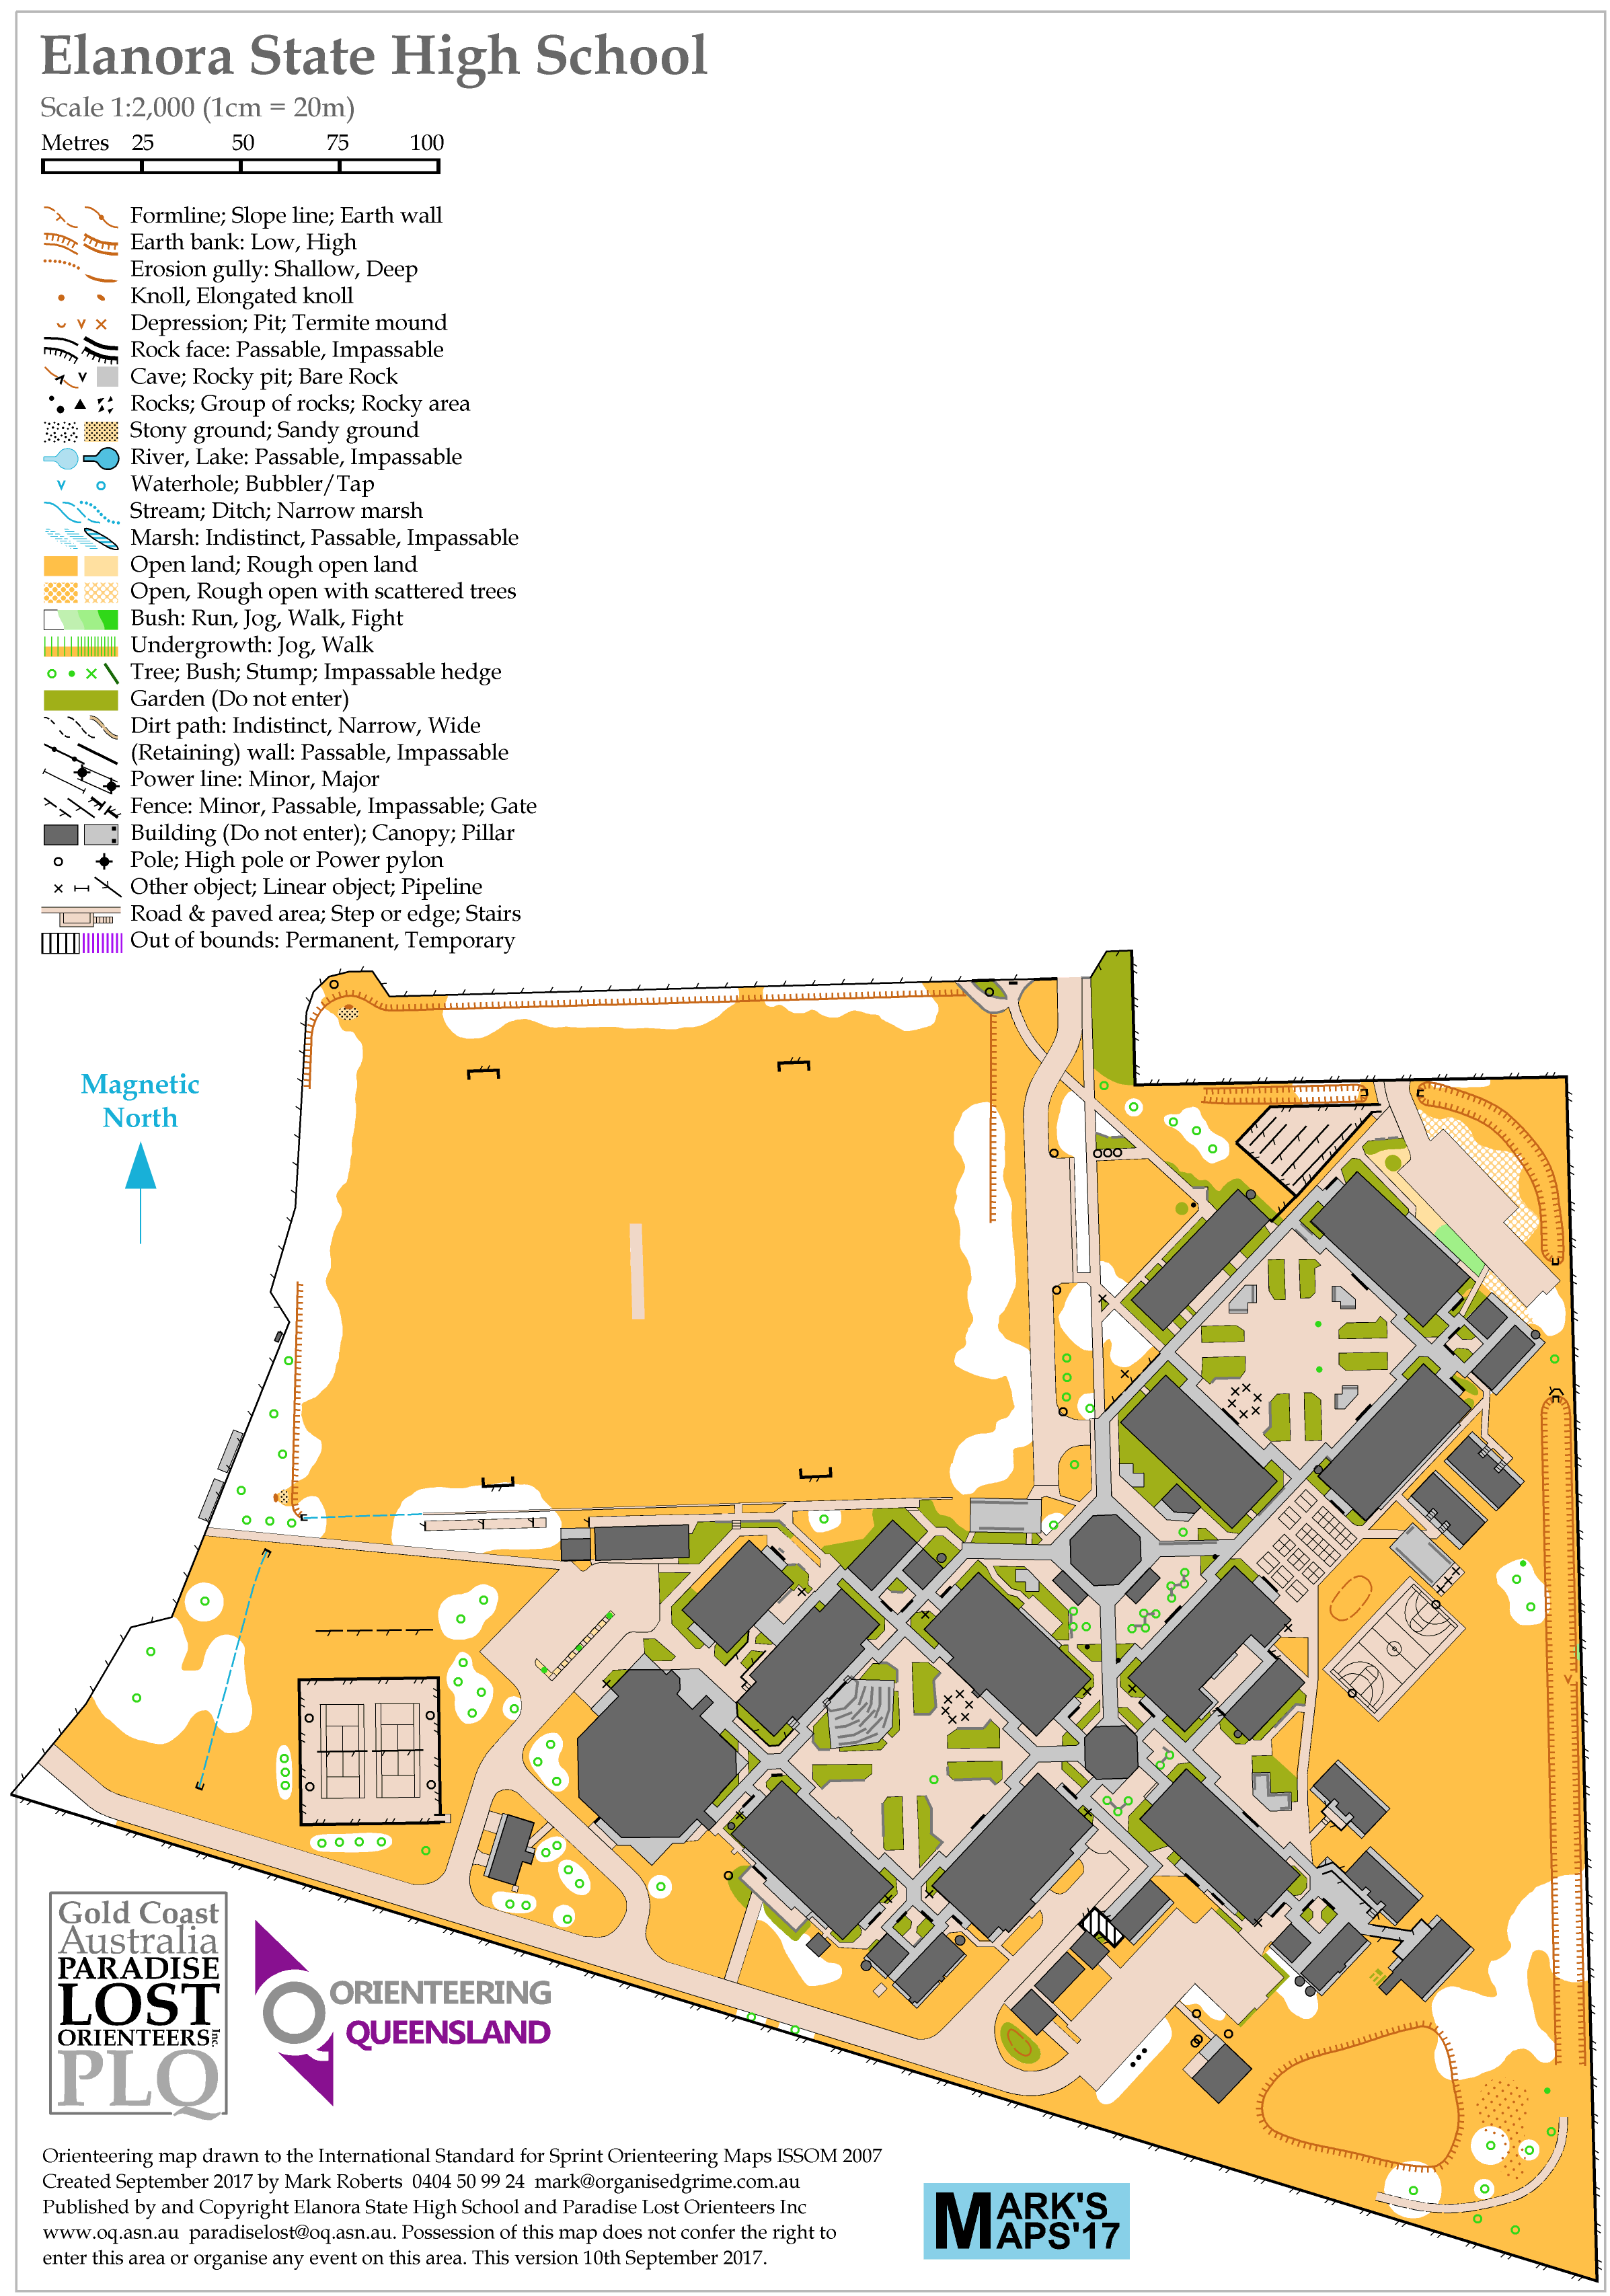 Elanora State High School orienteering map